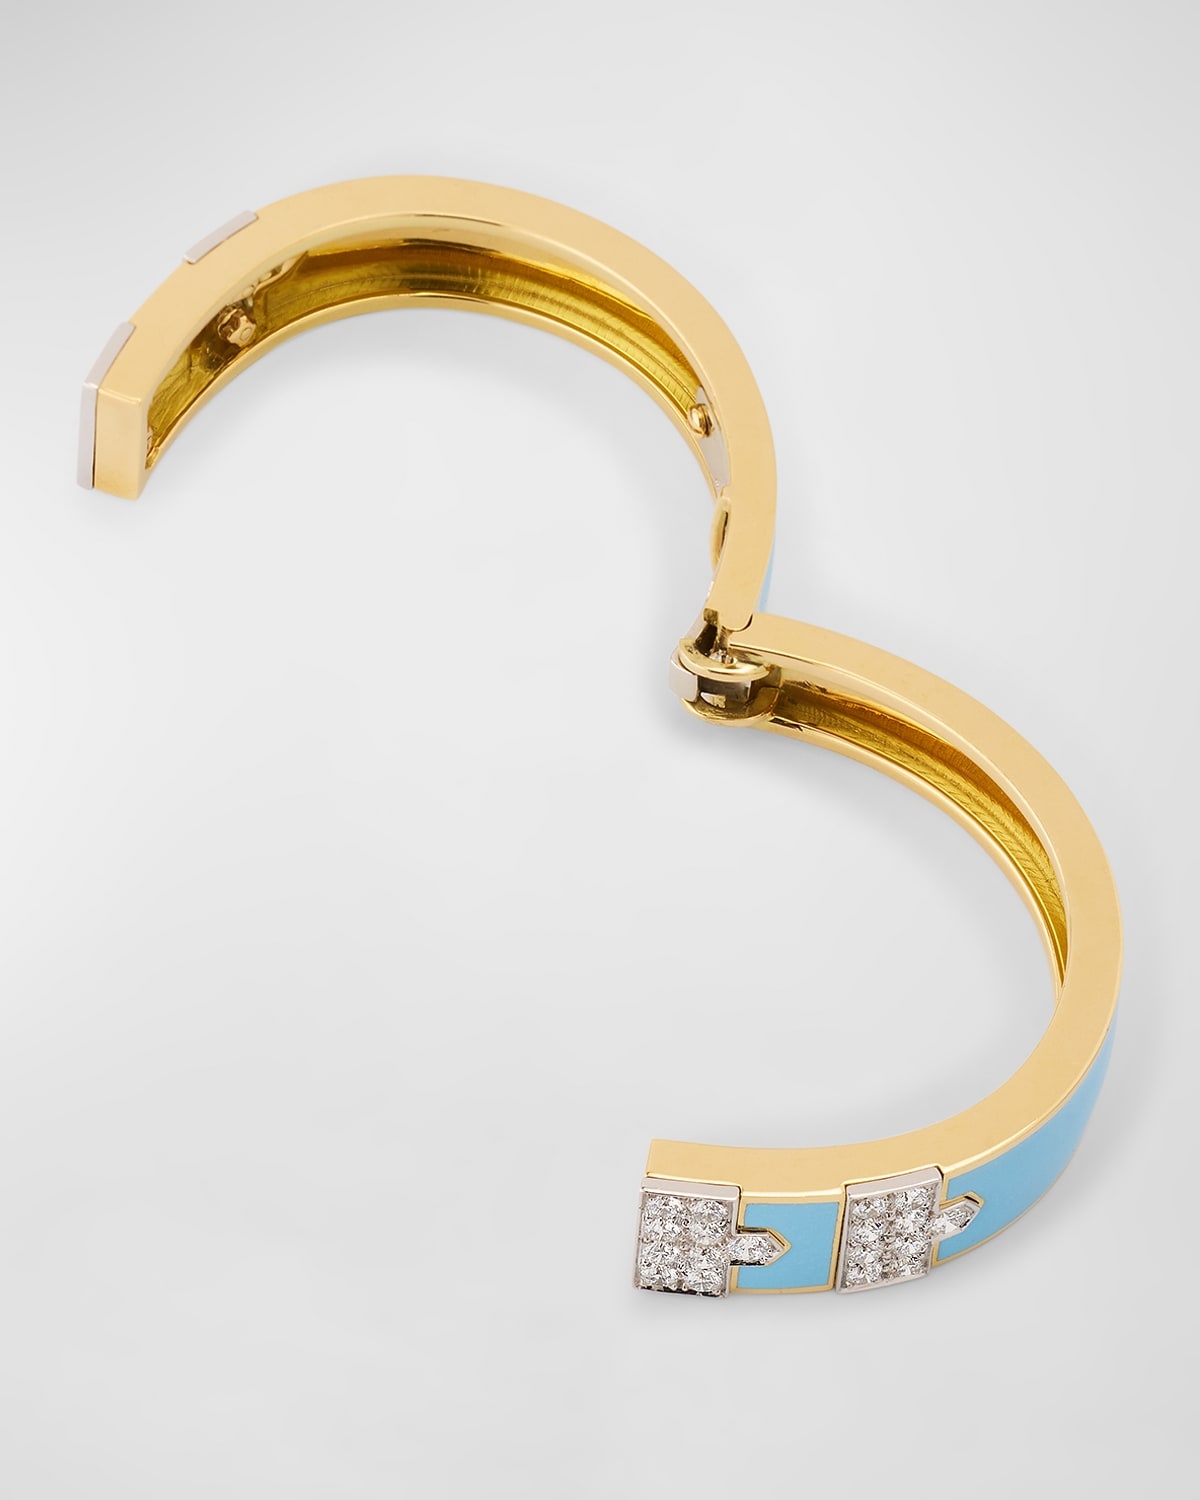 18K Yellow Gold and Platinum Lane Bracelet with Light Blue Enamel - 4